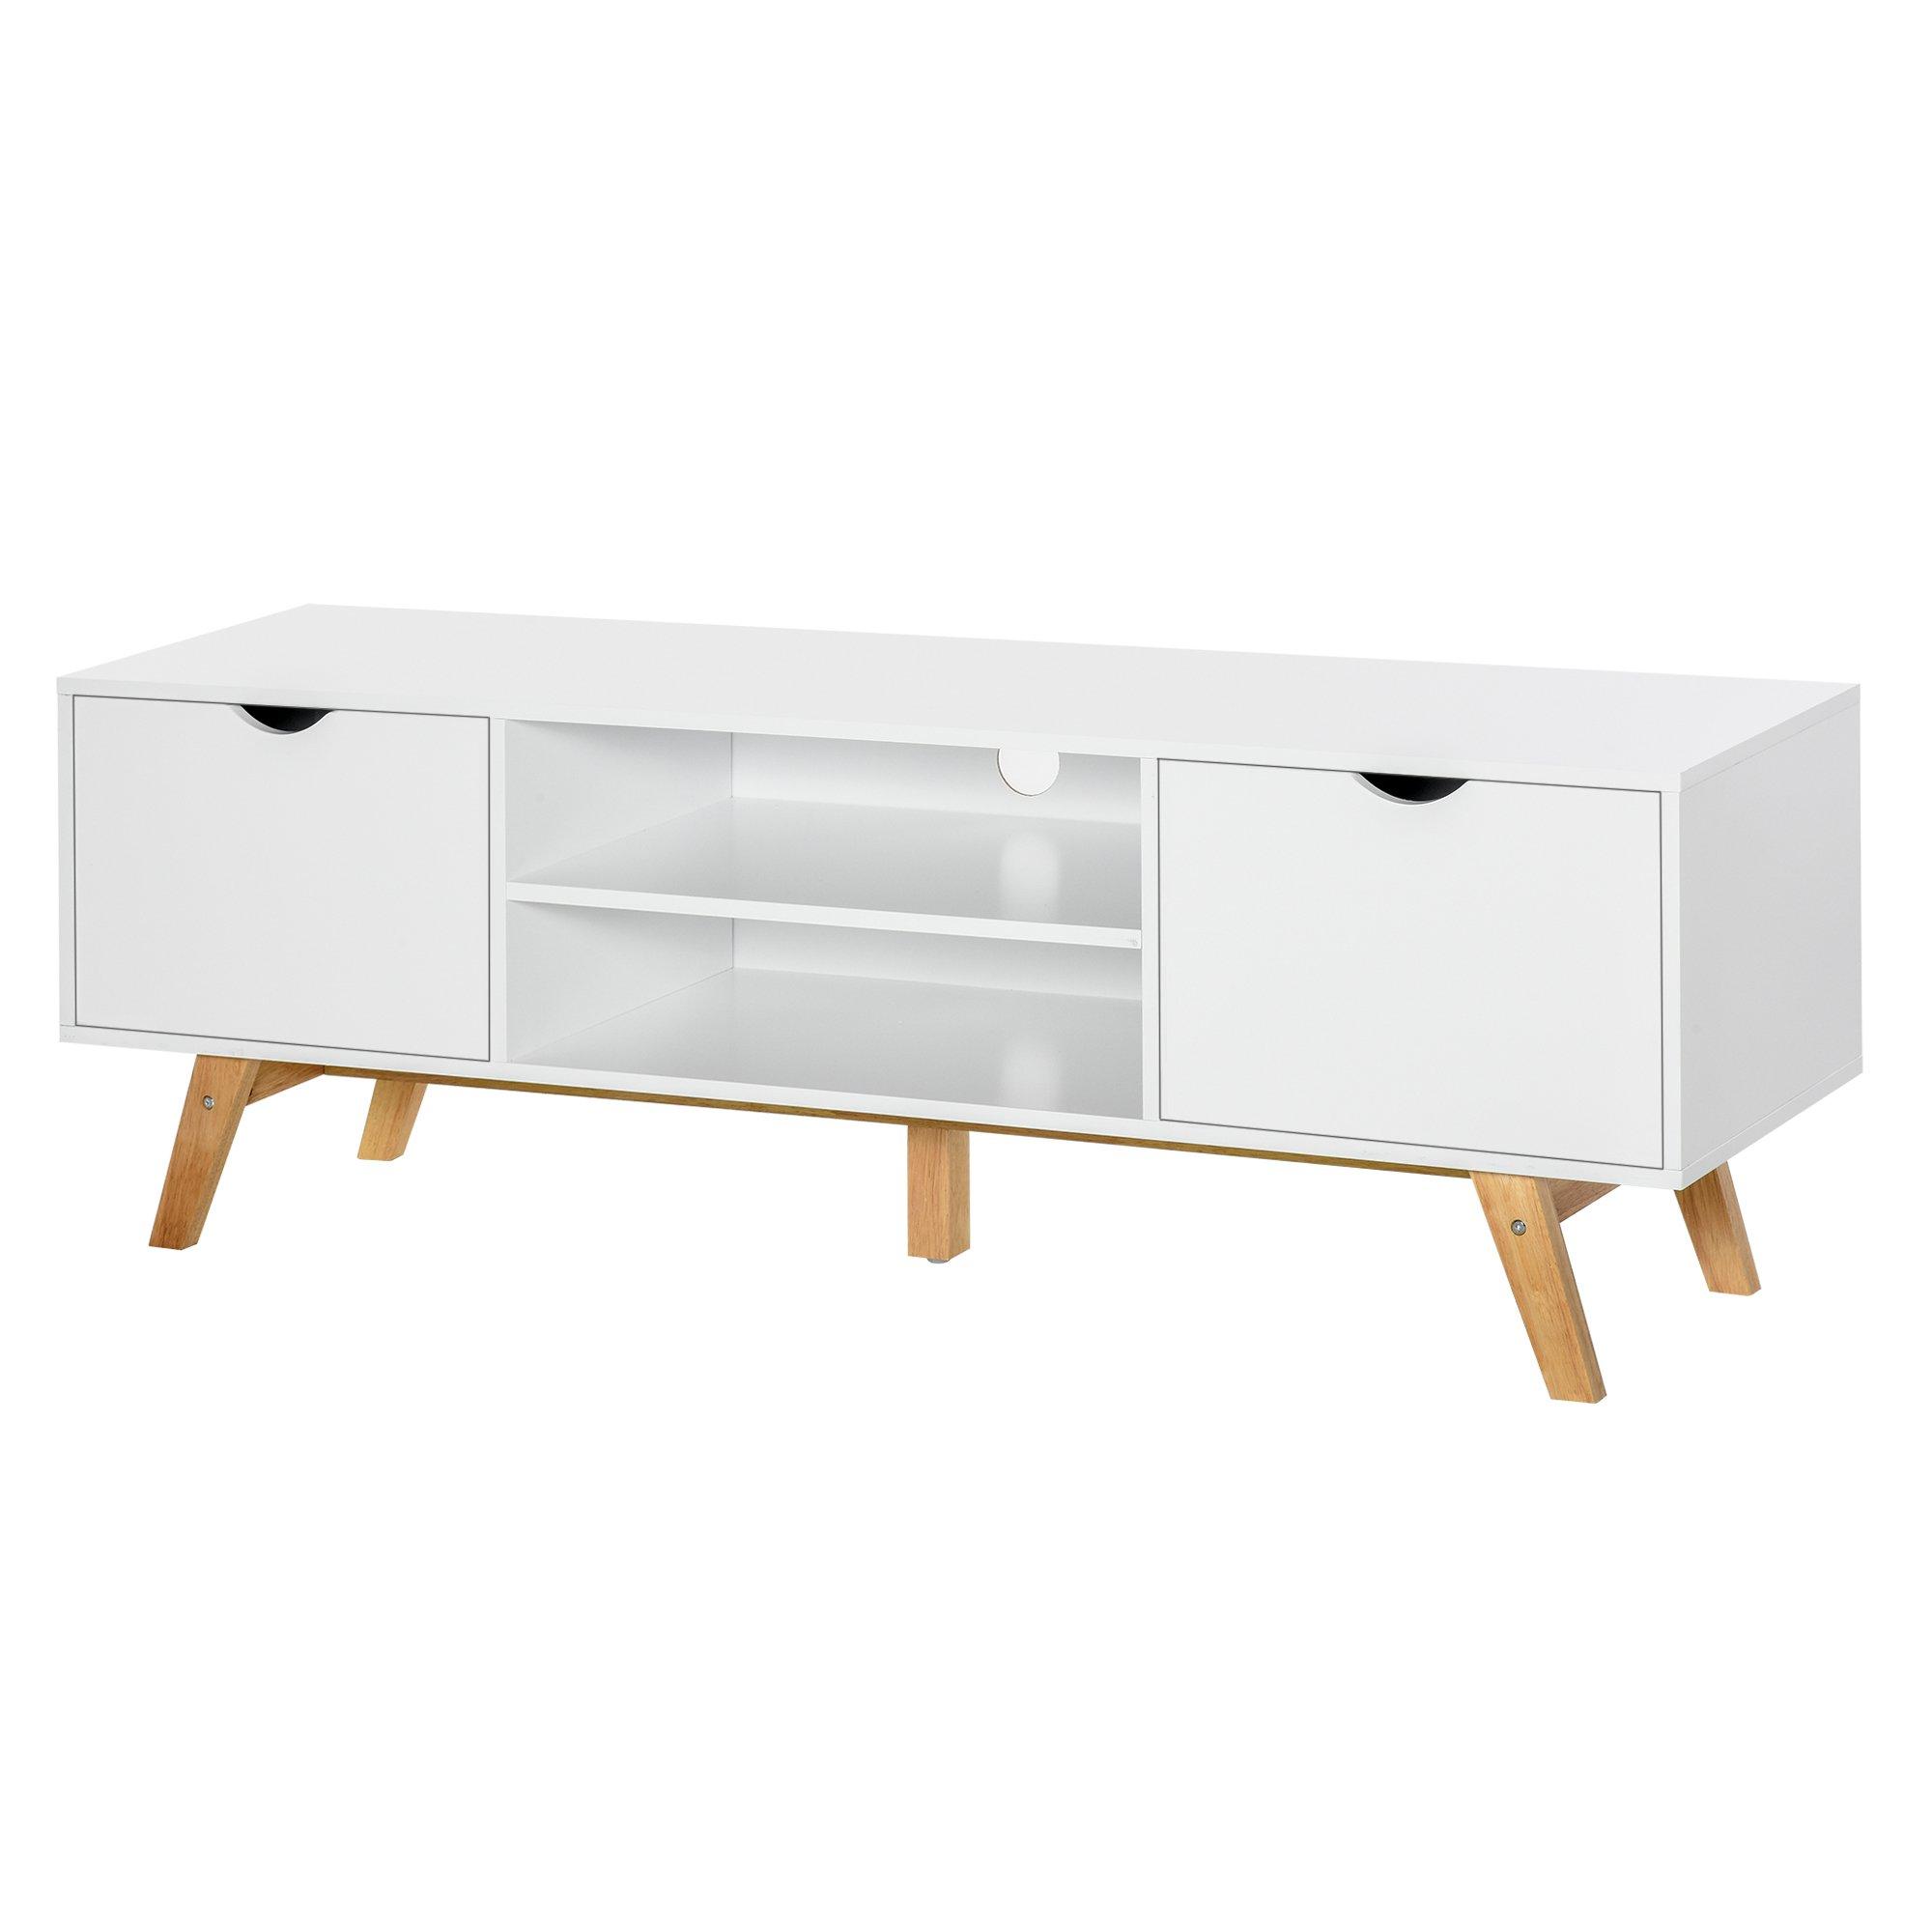 Elegant TV Stand Storage Cabinet Media Unit   Wood Legs 2 Cupboards